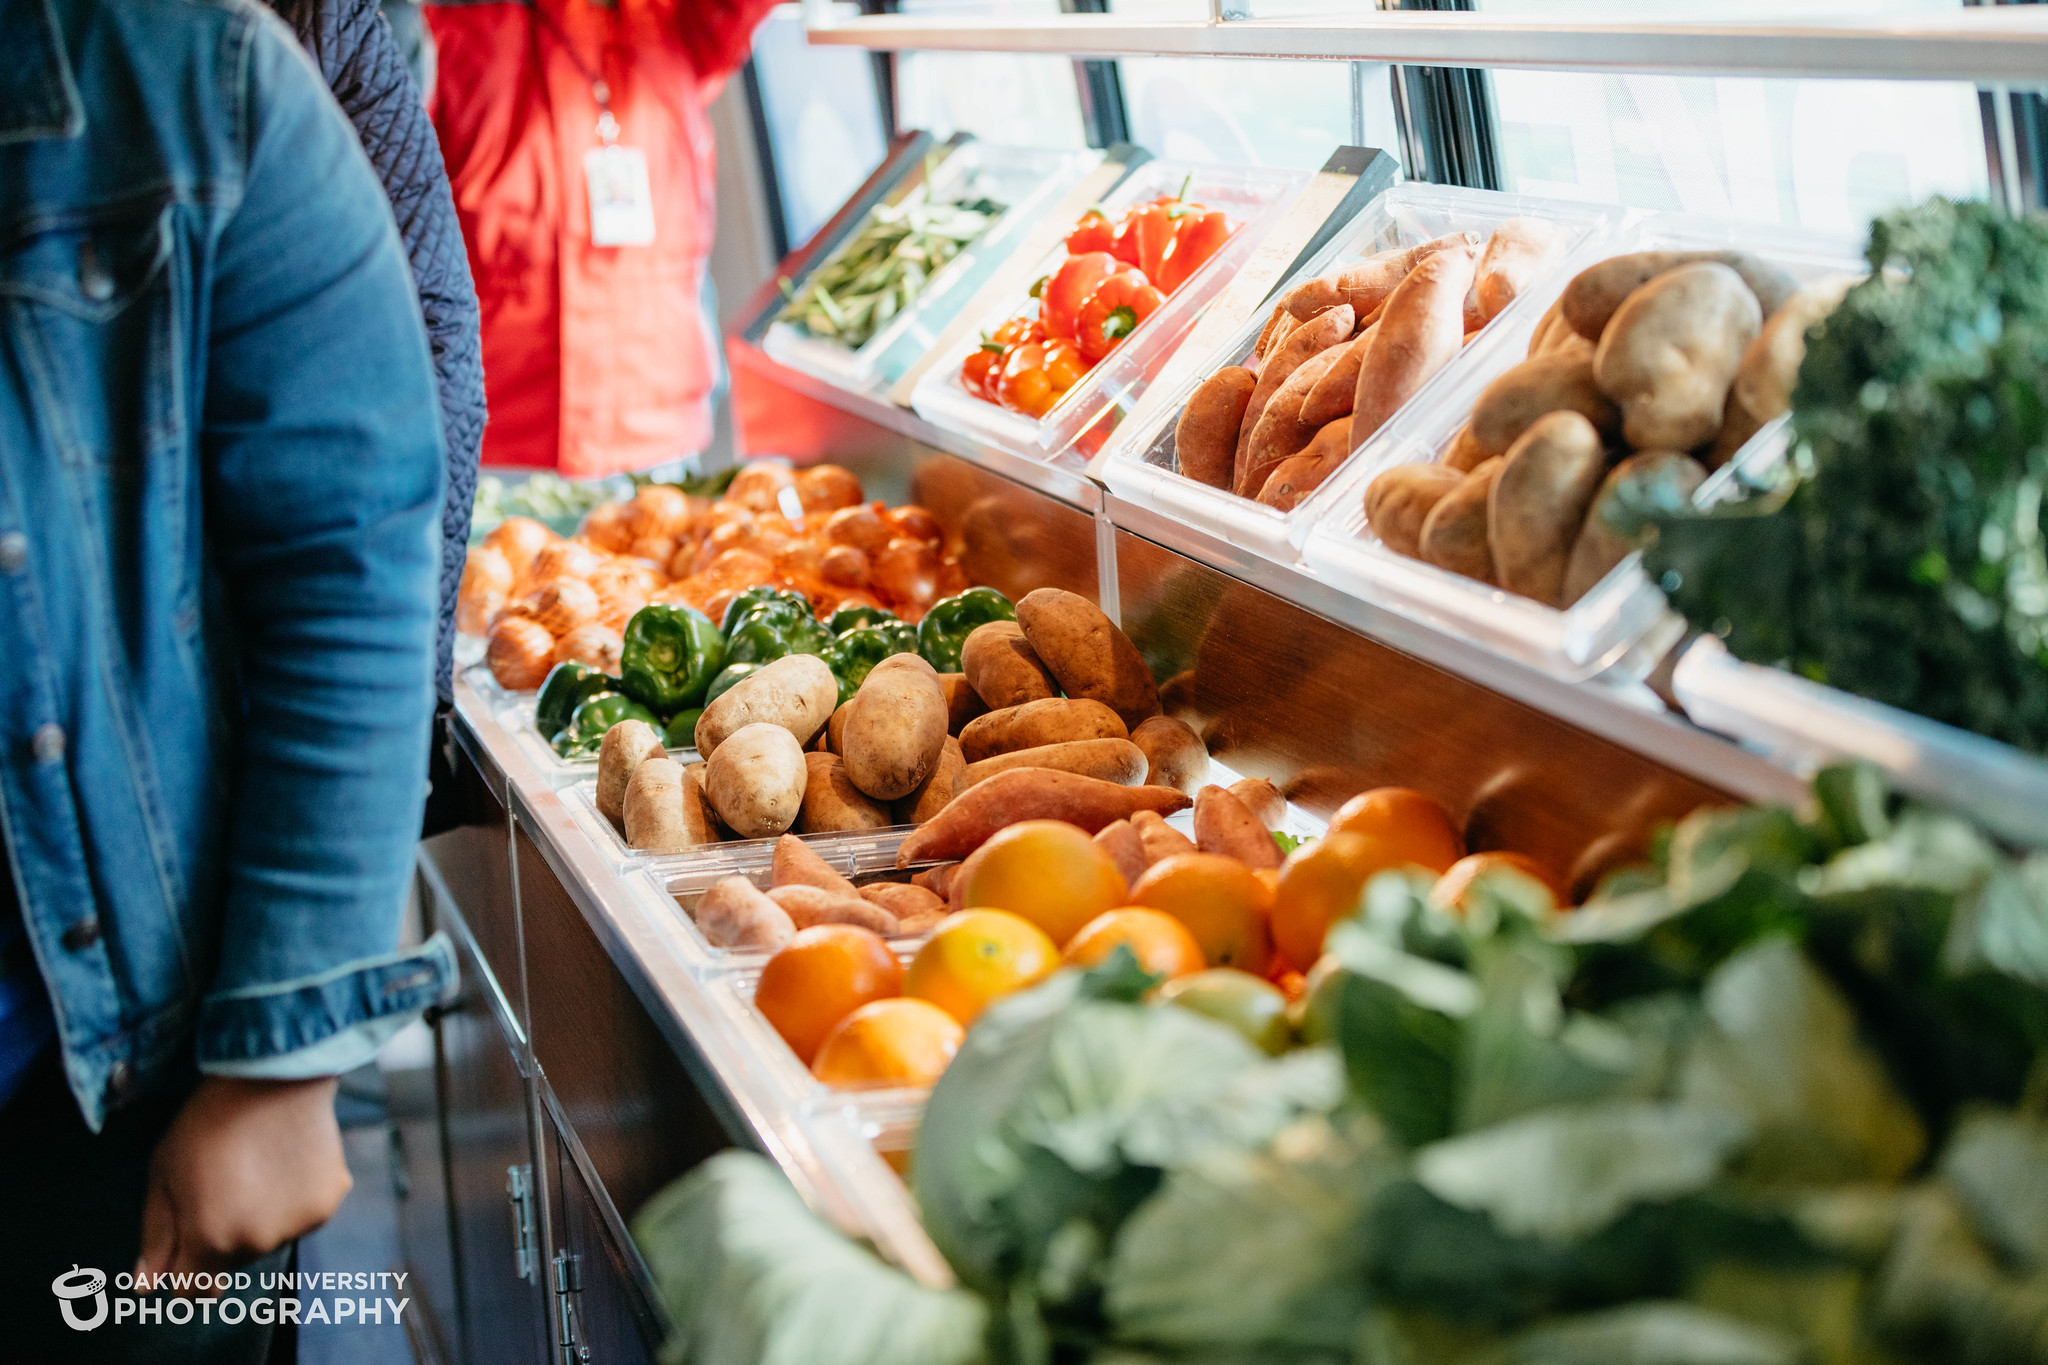 Fresh produce is available on Oakwood University's Mobile Market, which opened on Feb. 2, 2021. Photo provided by Oakwood University